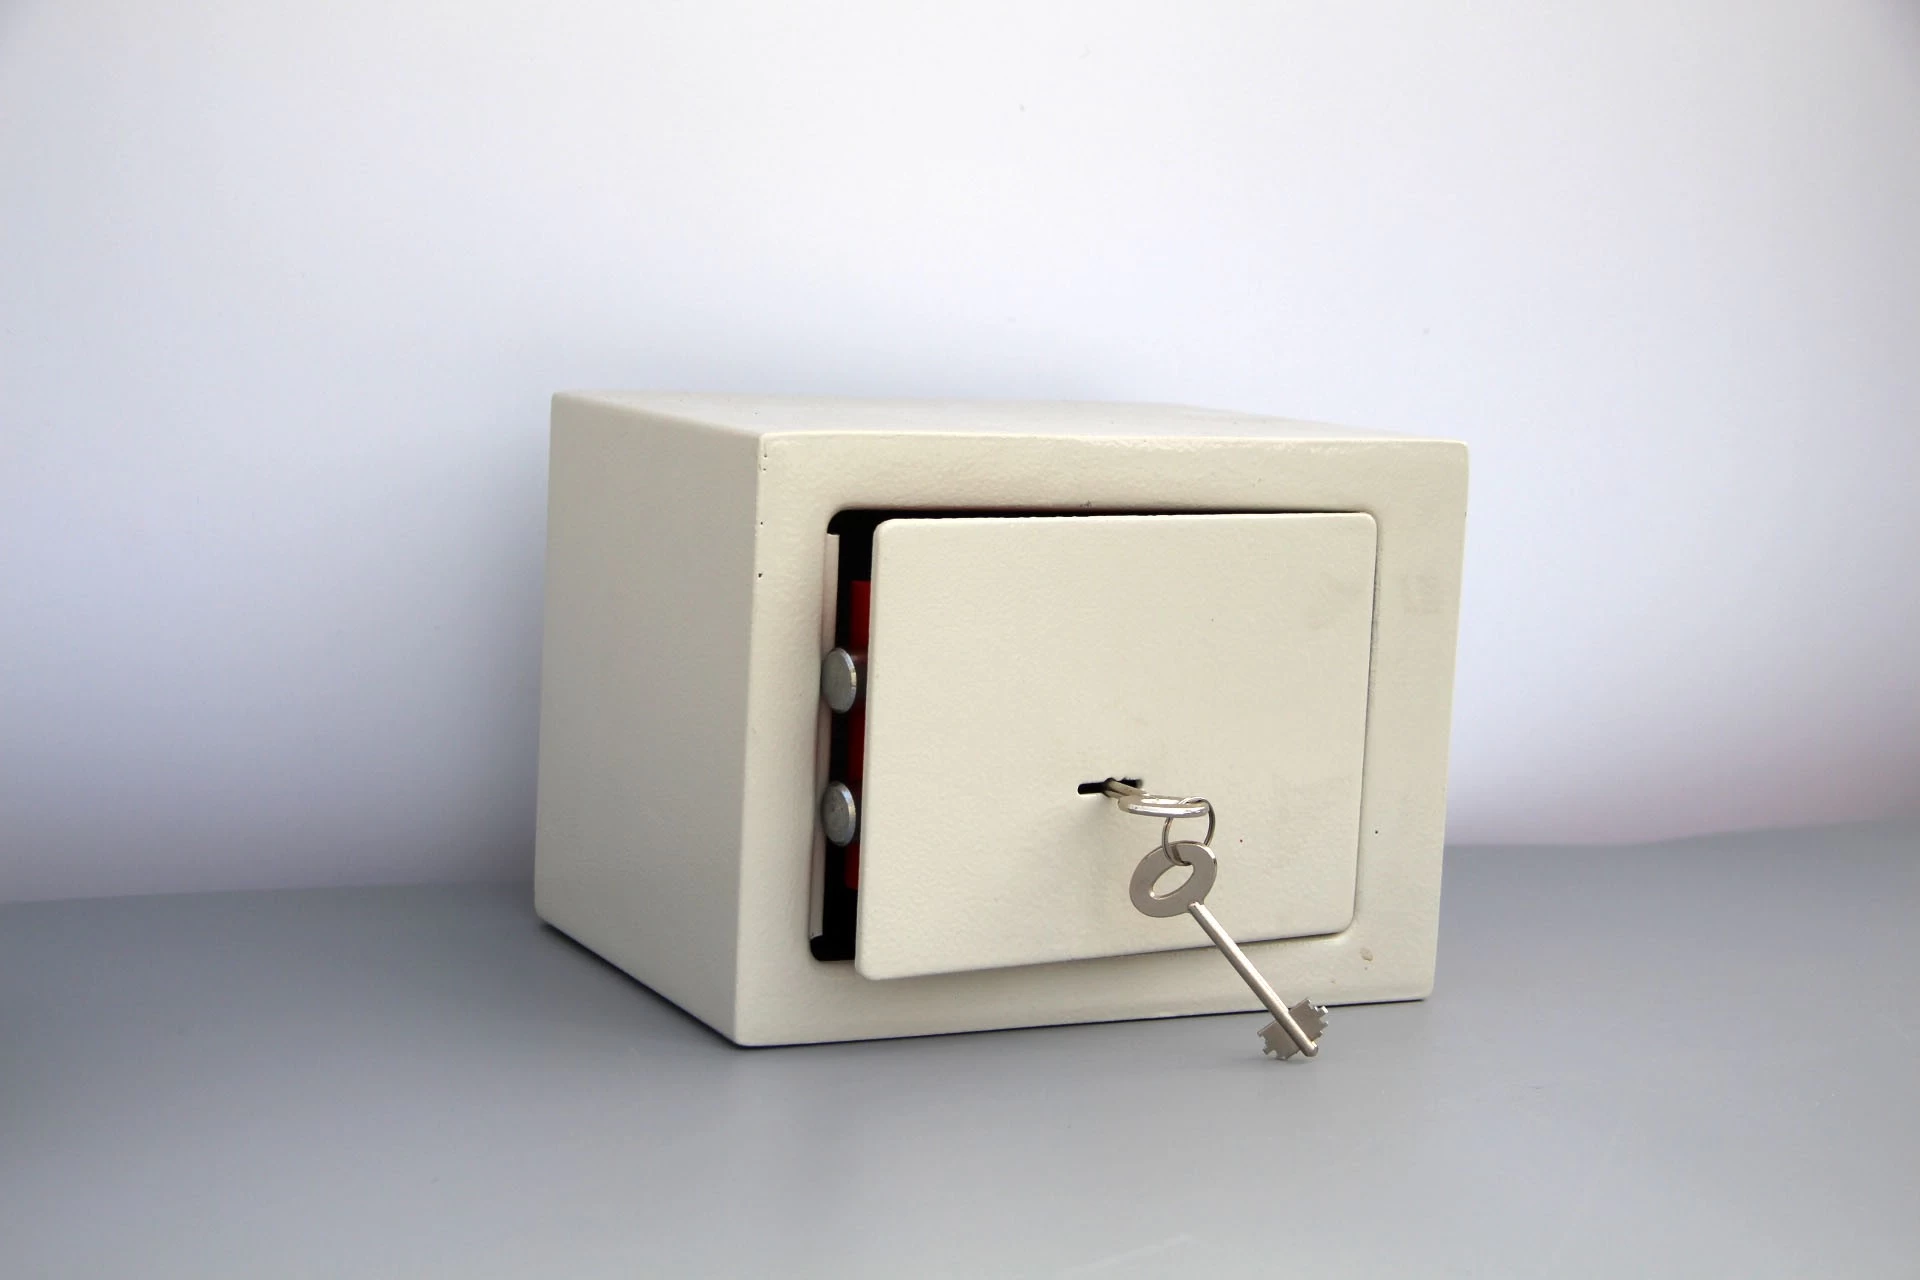 mini size key lock home office safe box